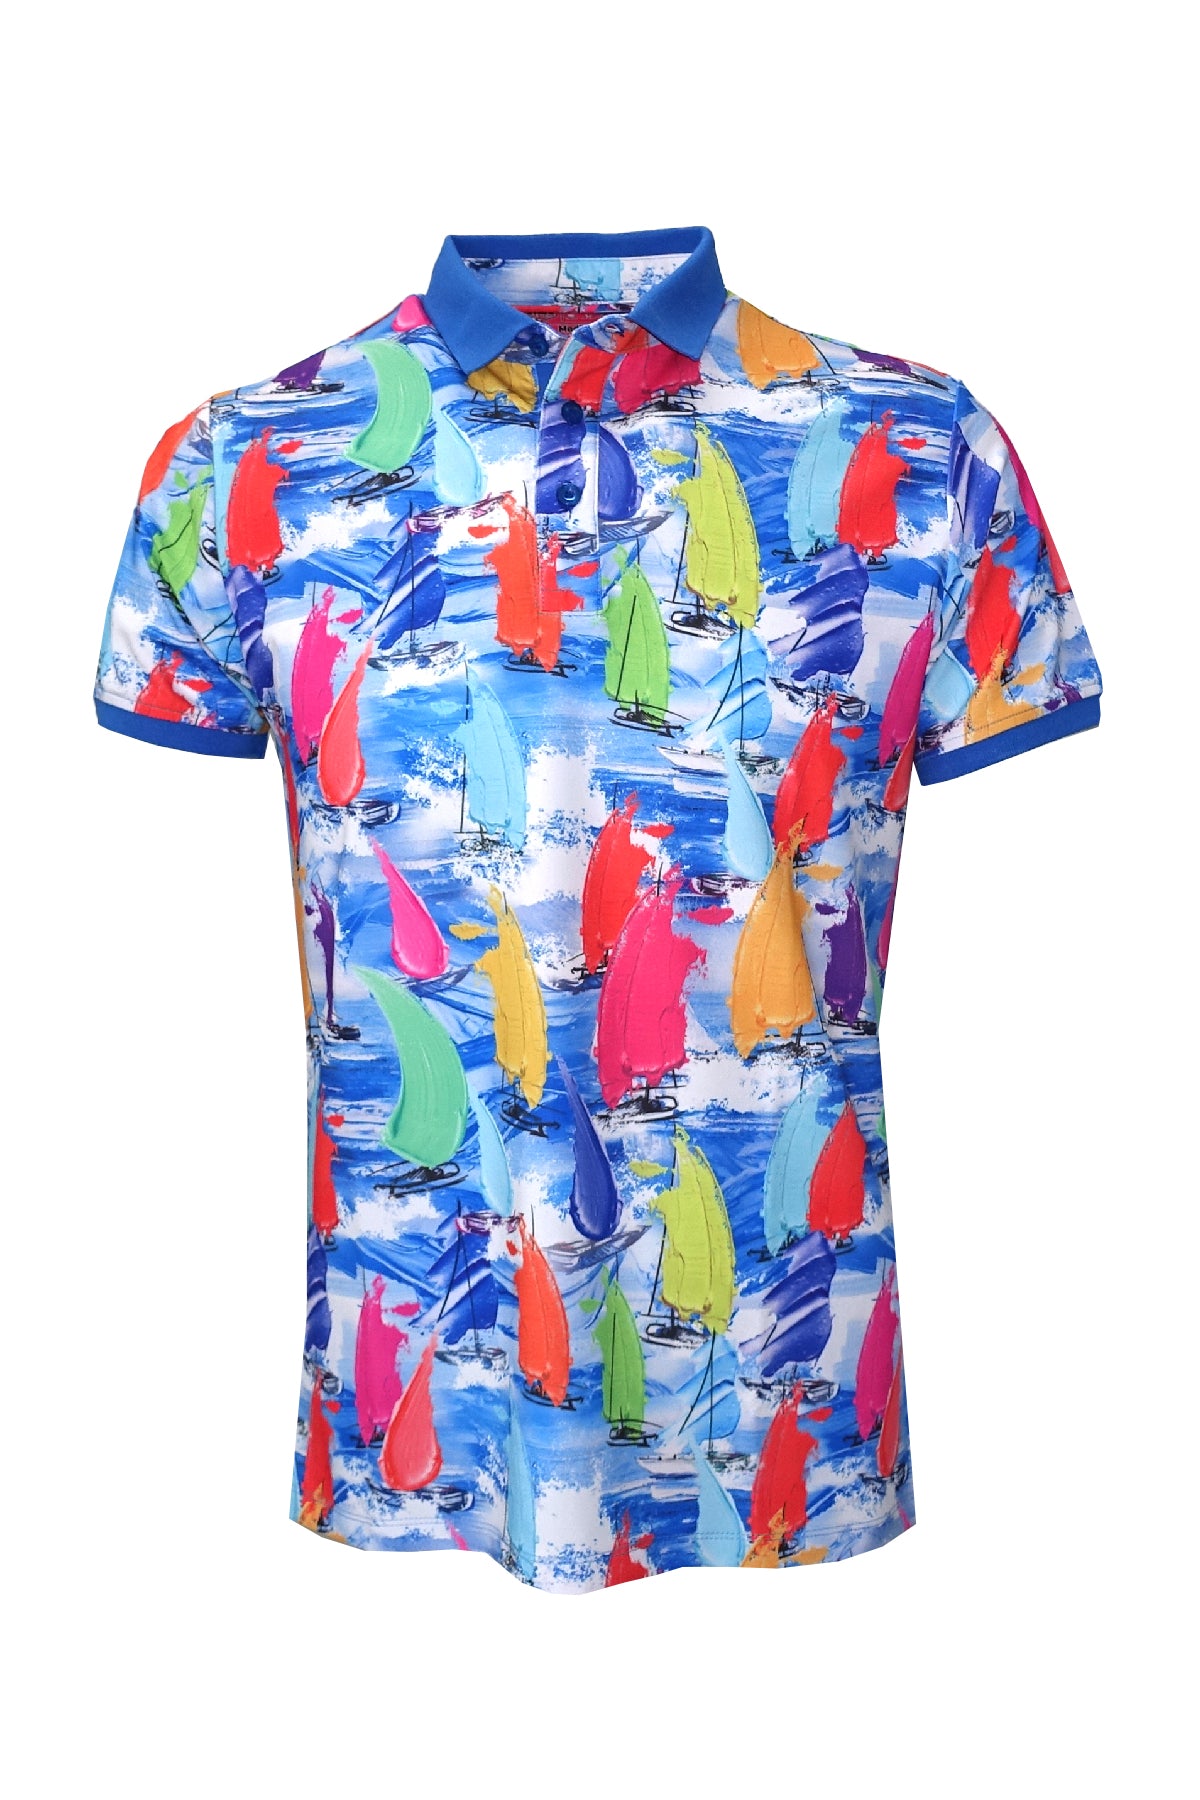 League Men's Short Sleeve Fisherman Sail Patterned UV Protected Polo Shirt